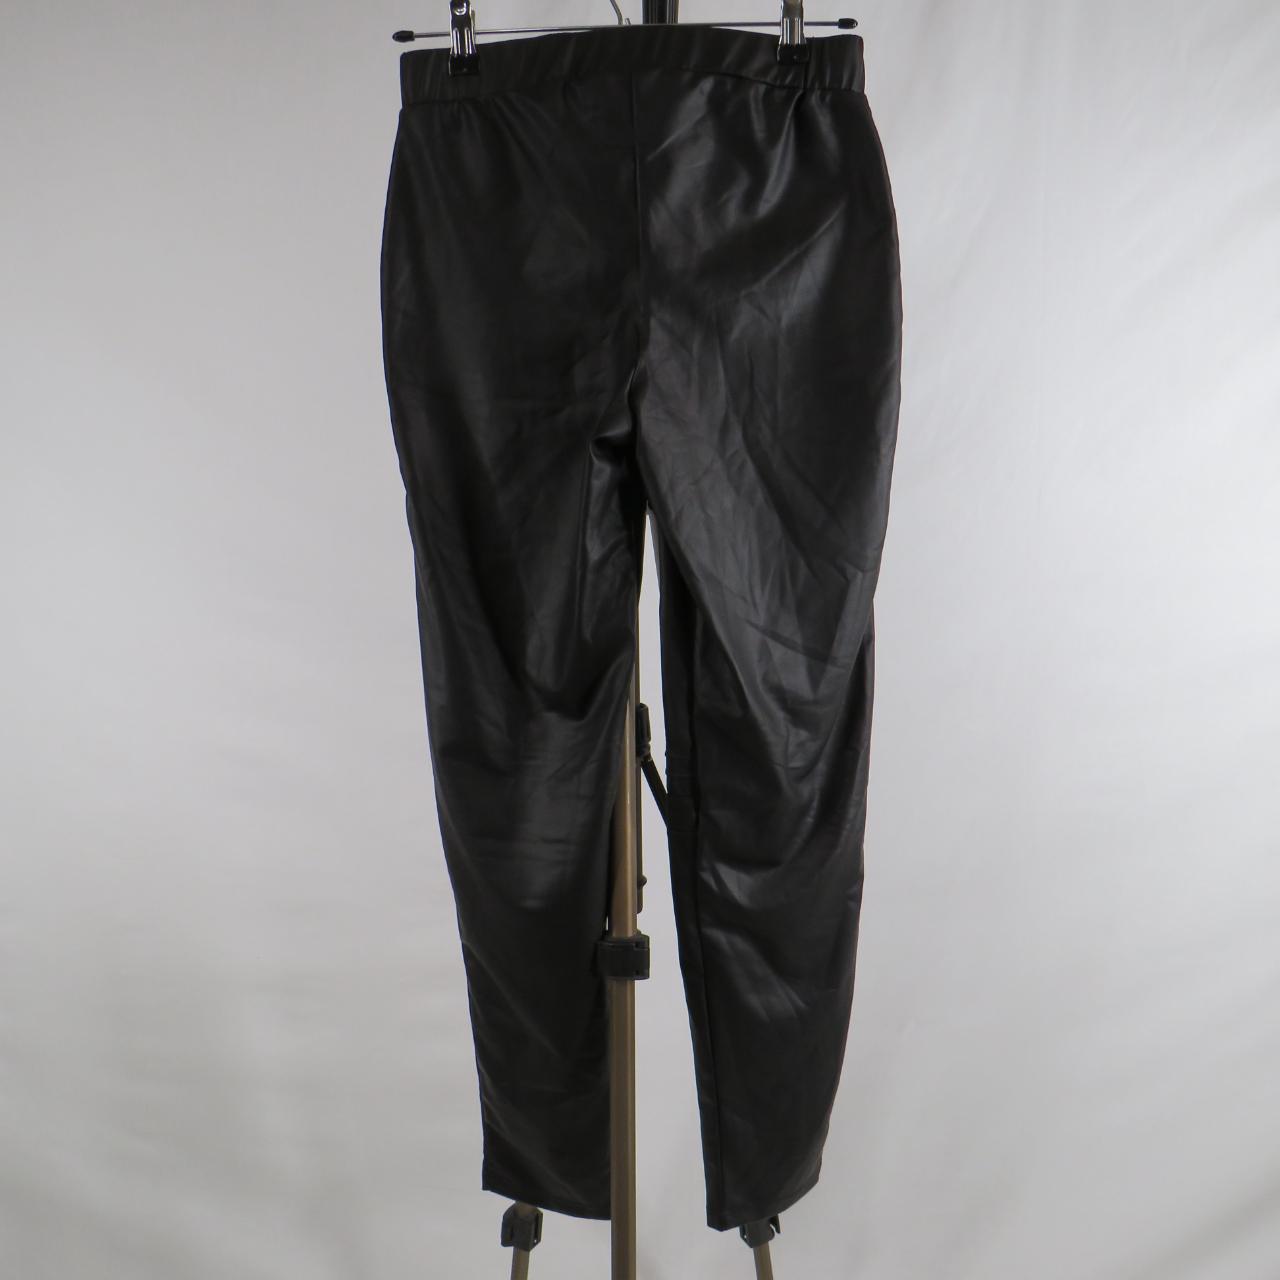 Balera black faux leather leggings with elastic... - Depop